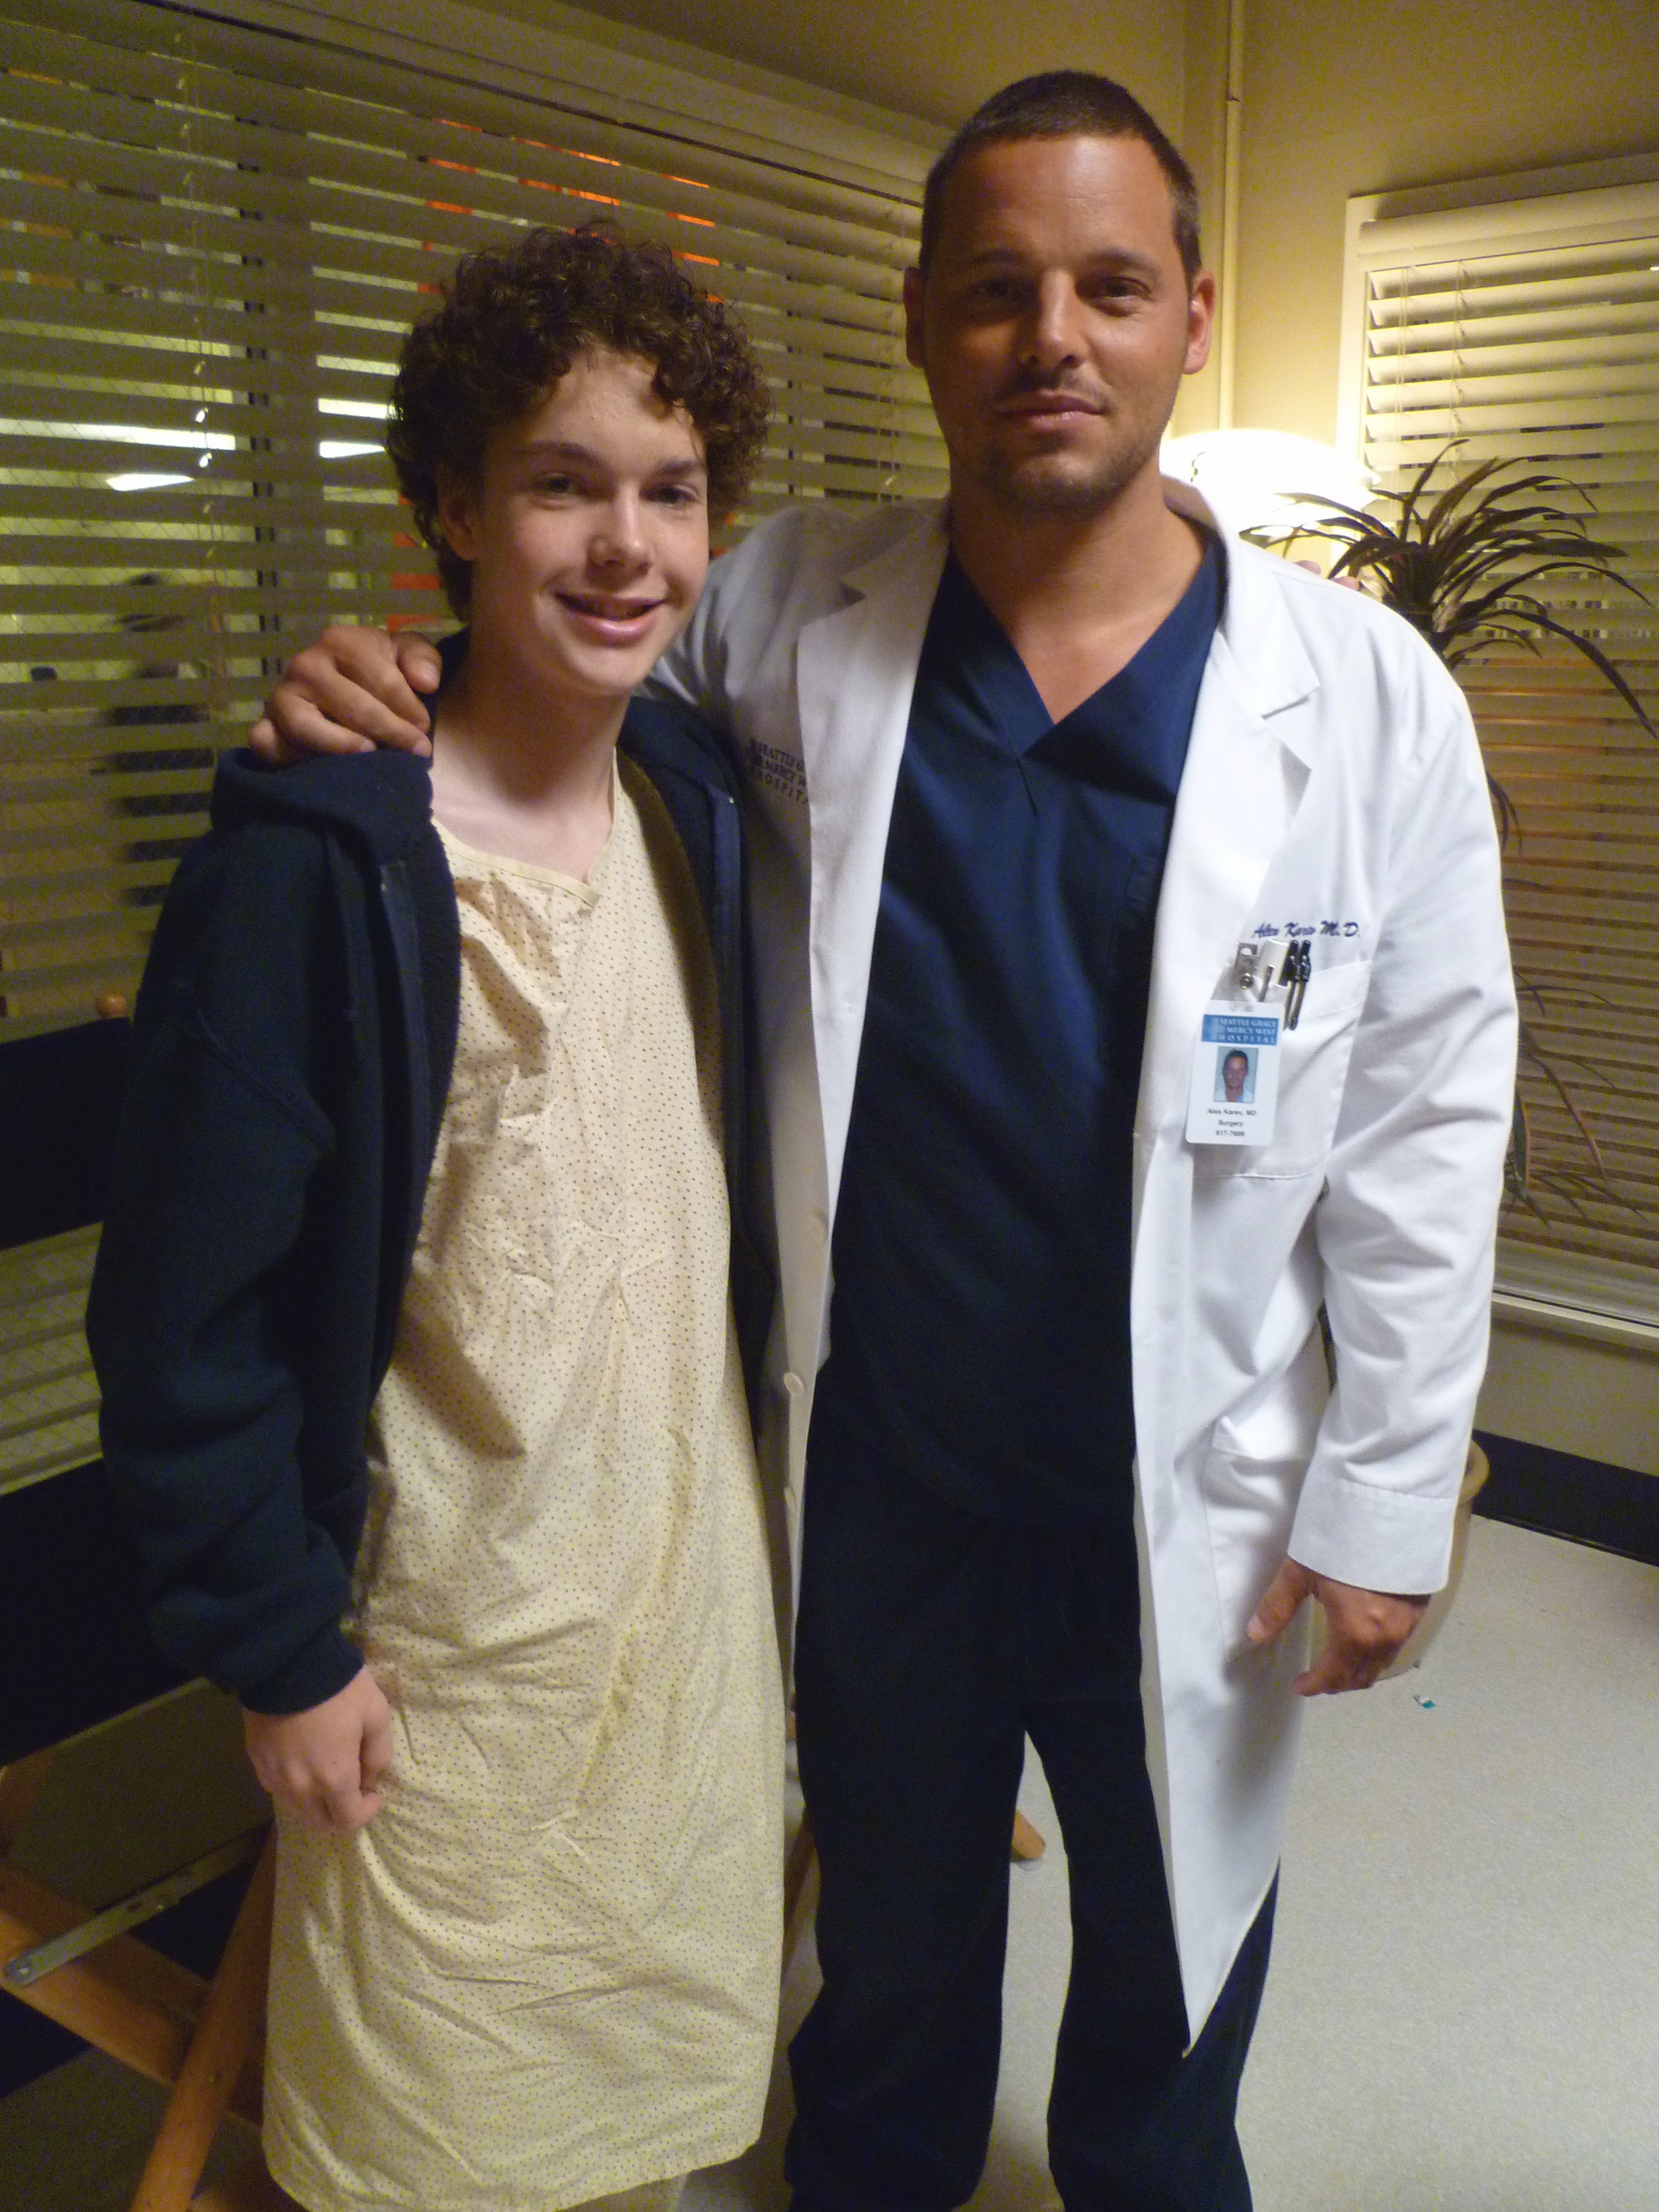 Jarrod and his 'surgeon' Justin Chambers on Grey's Anatomy, Sept. 8, 2010.